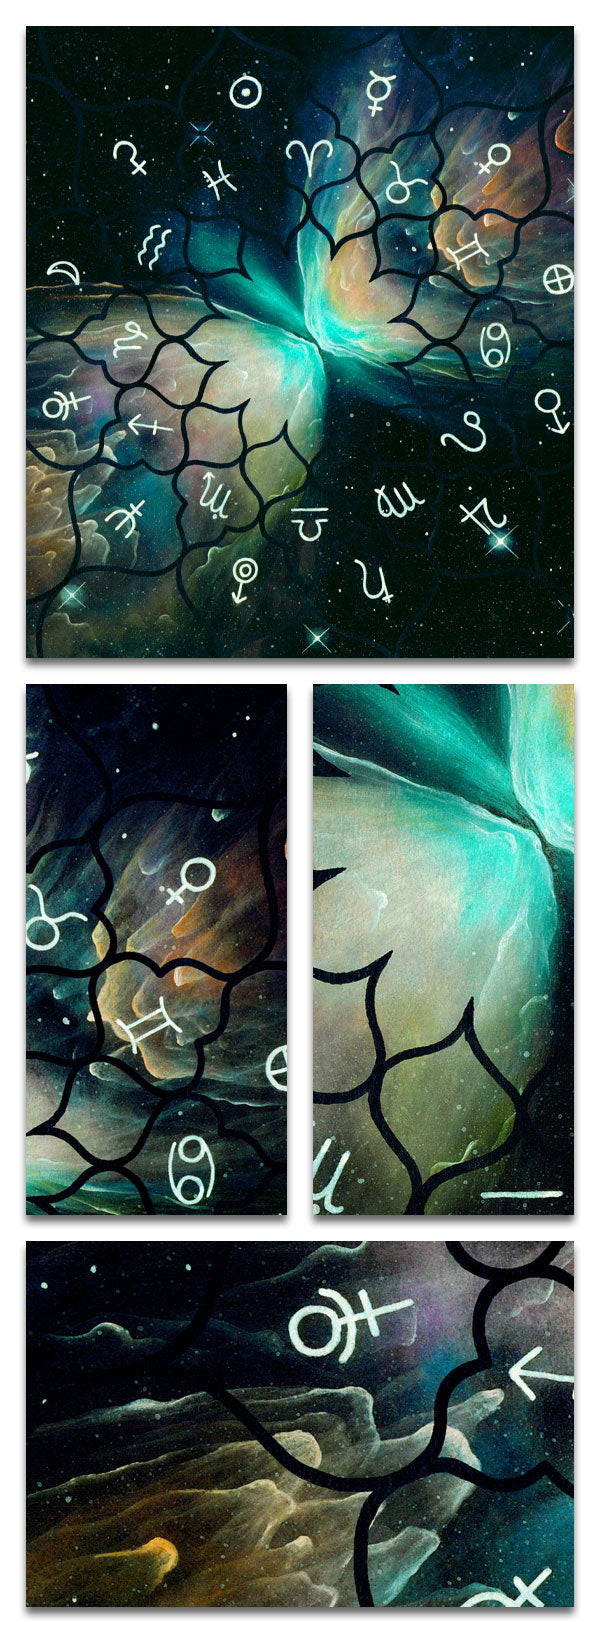 Nebula Gallery Image